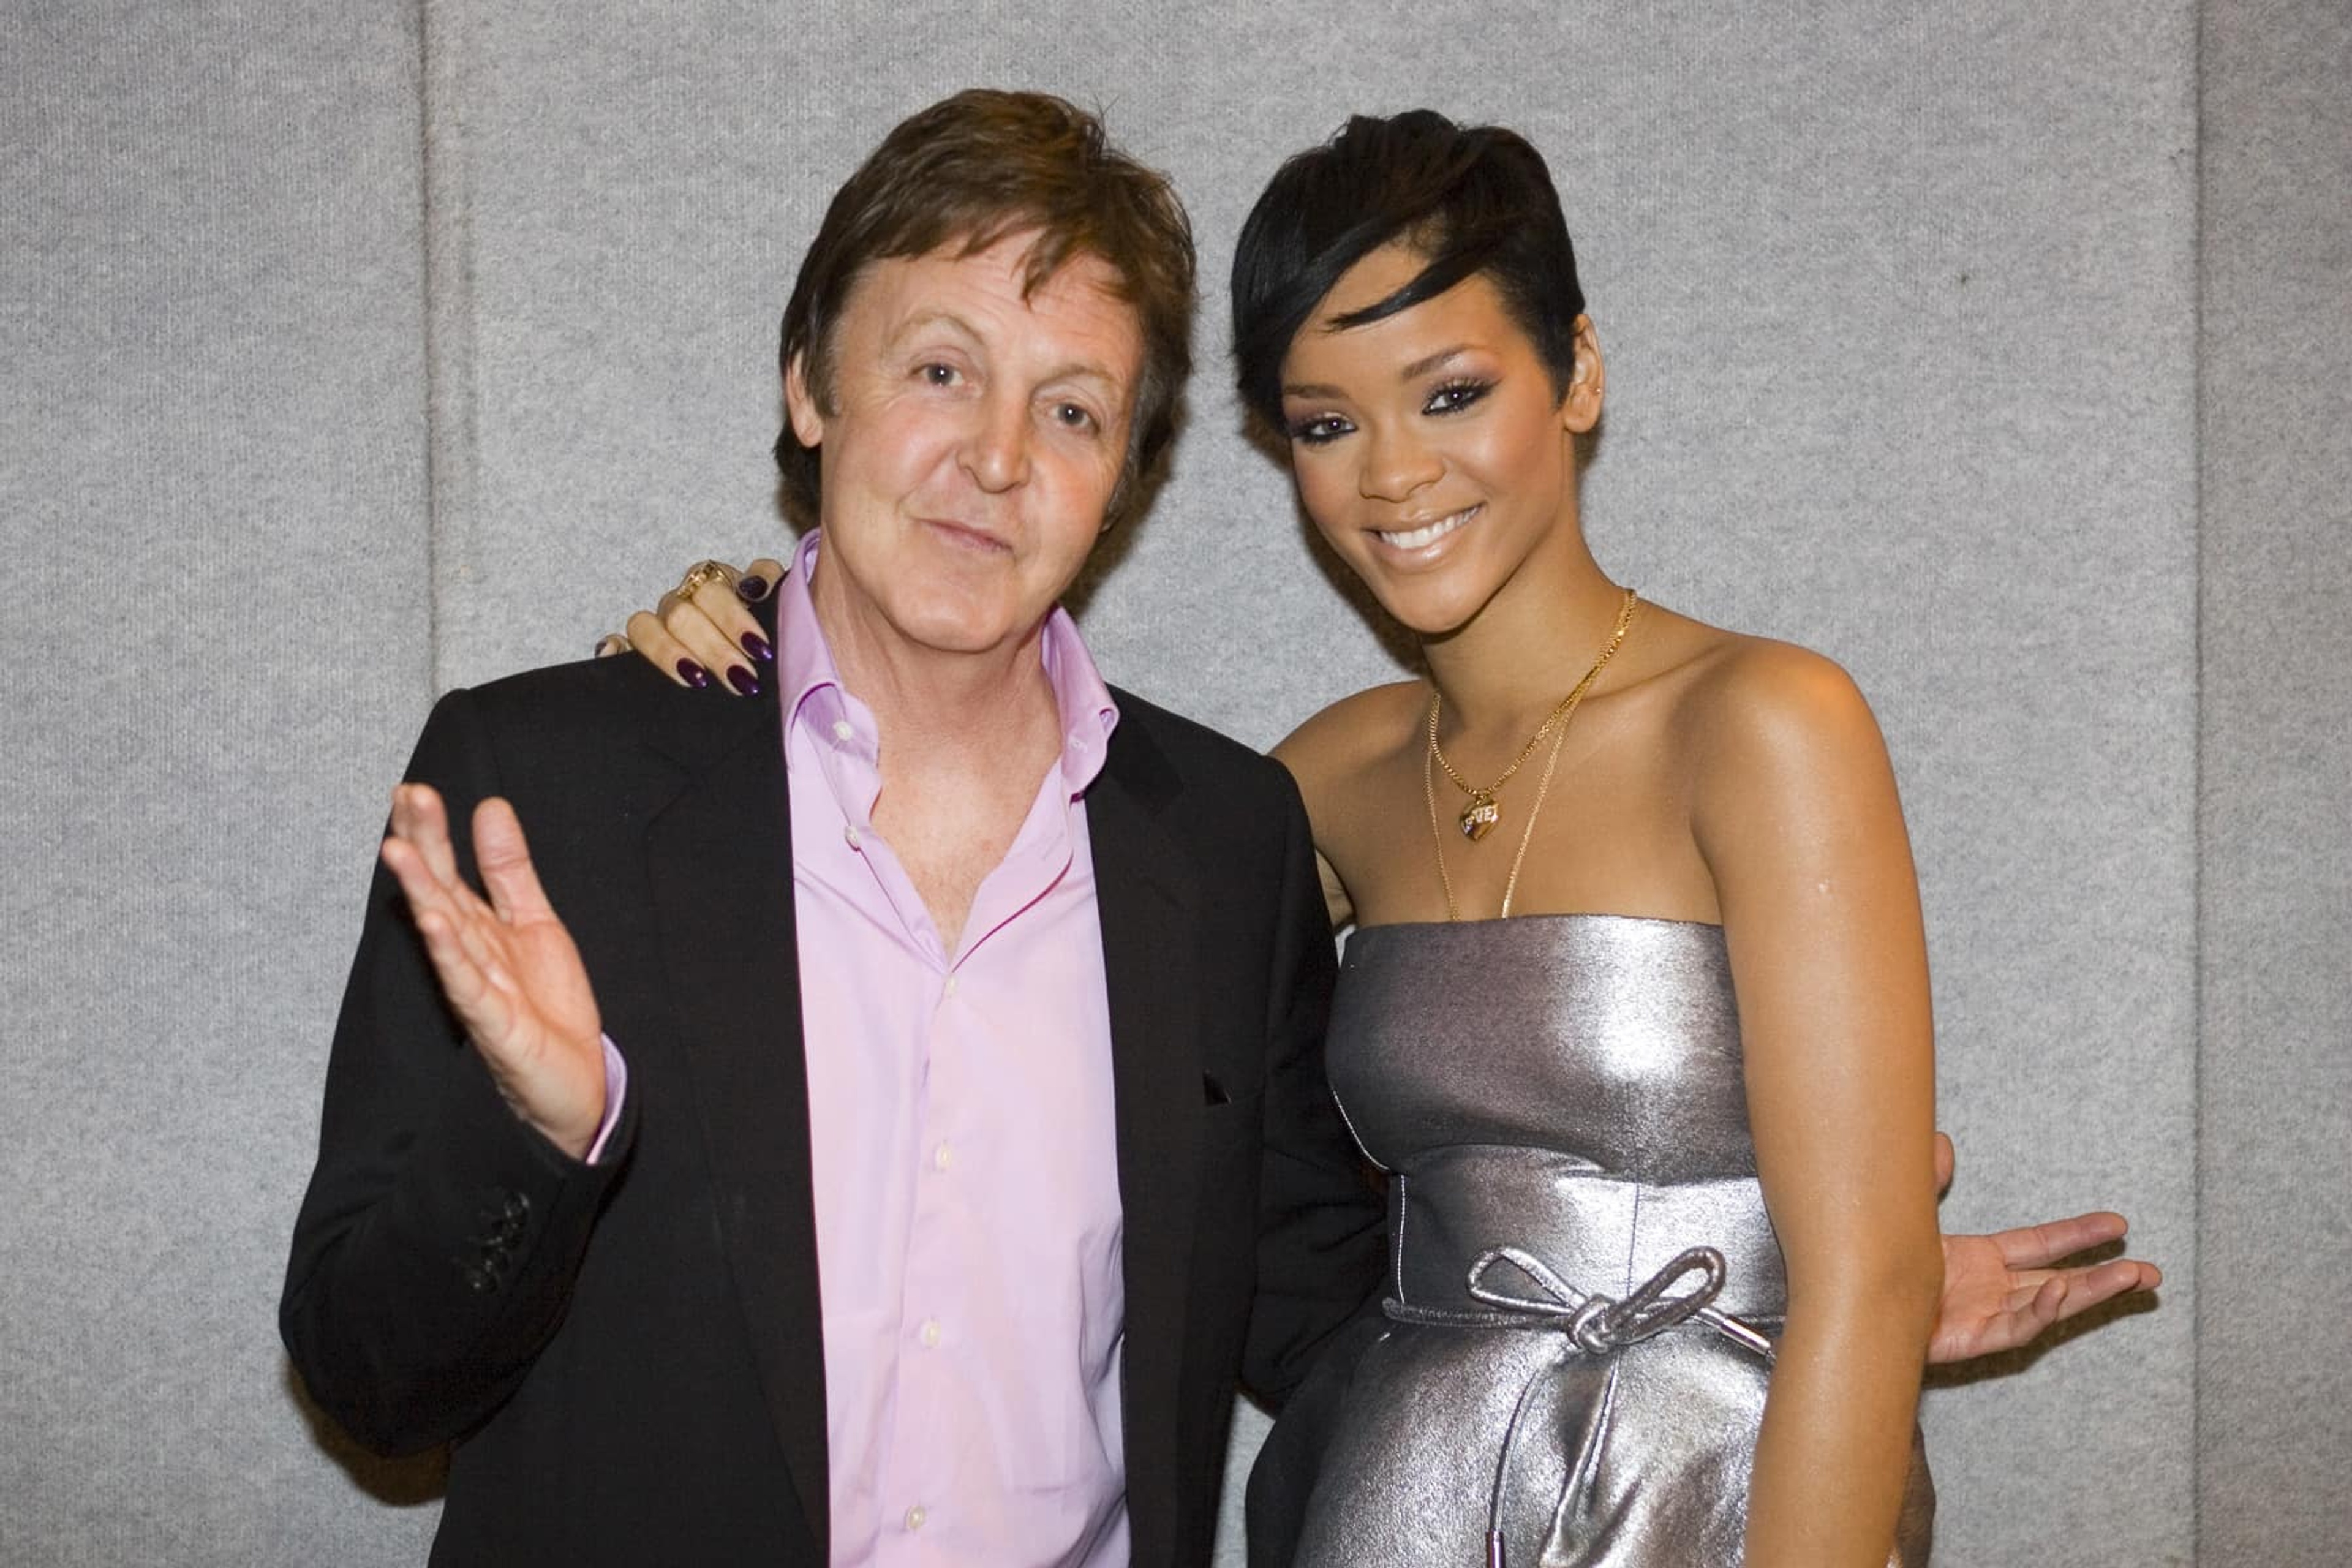 Paul poses with Rihanna at the 2008 Brit Awards